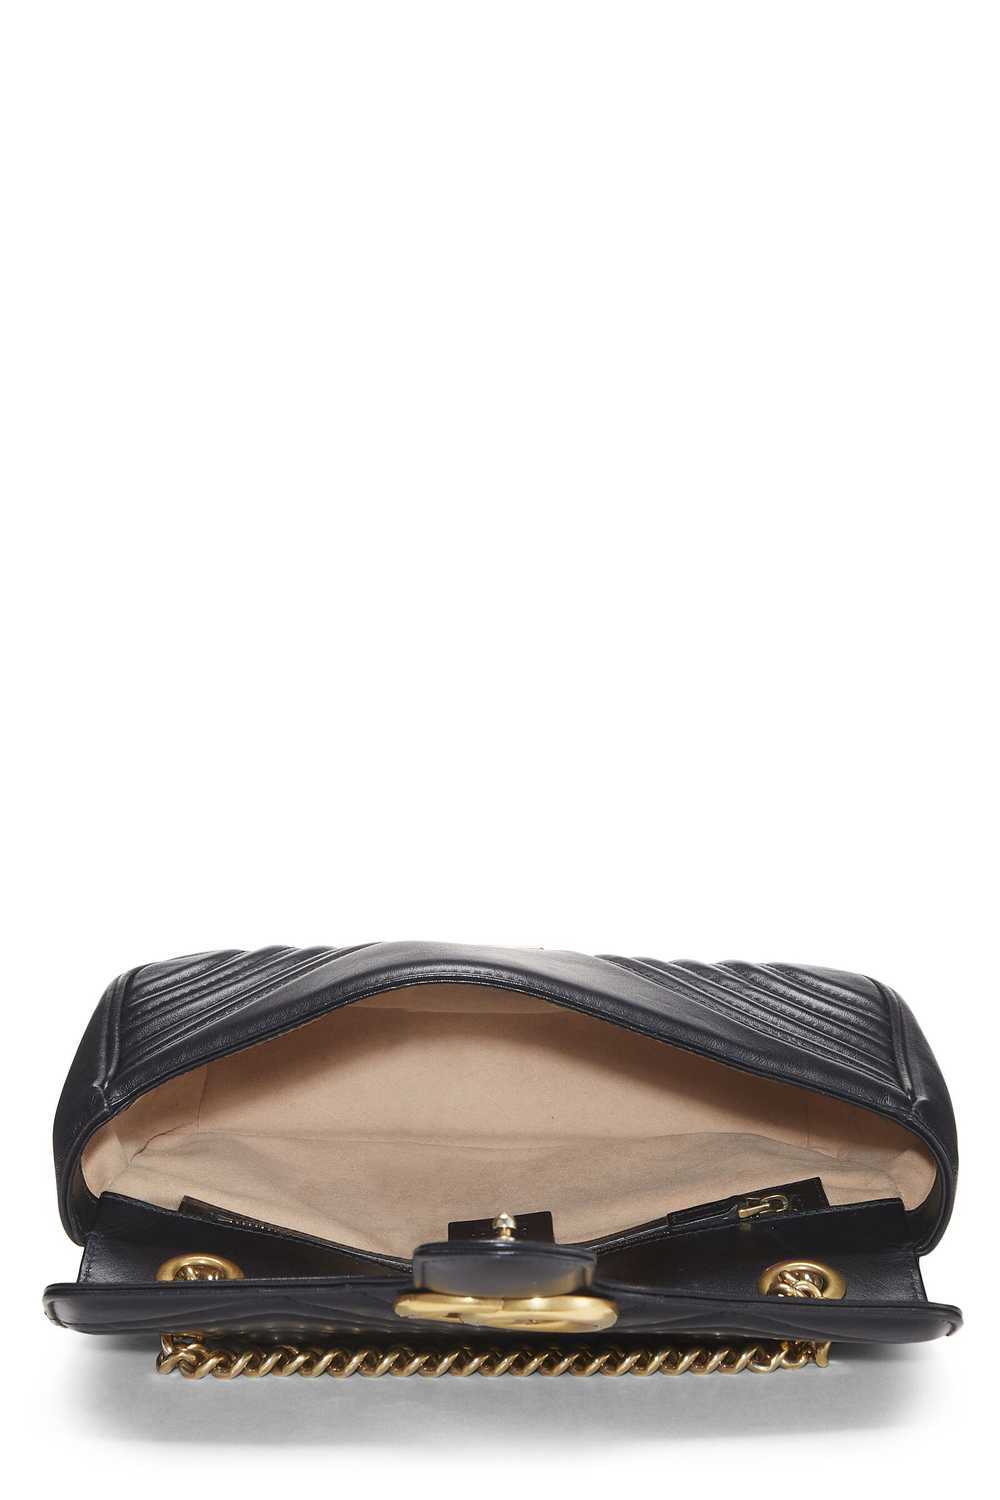 Black Leather GG Marmont Shoulder Bag Small - image 6